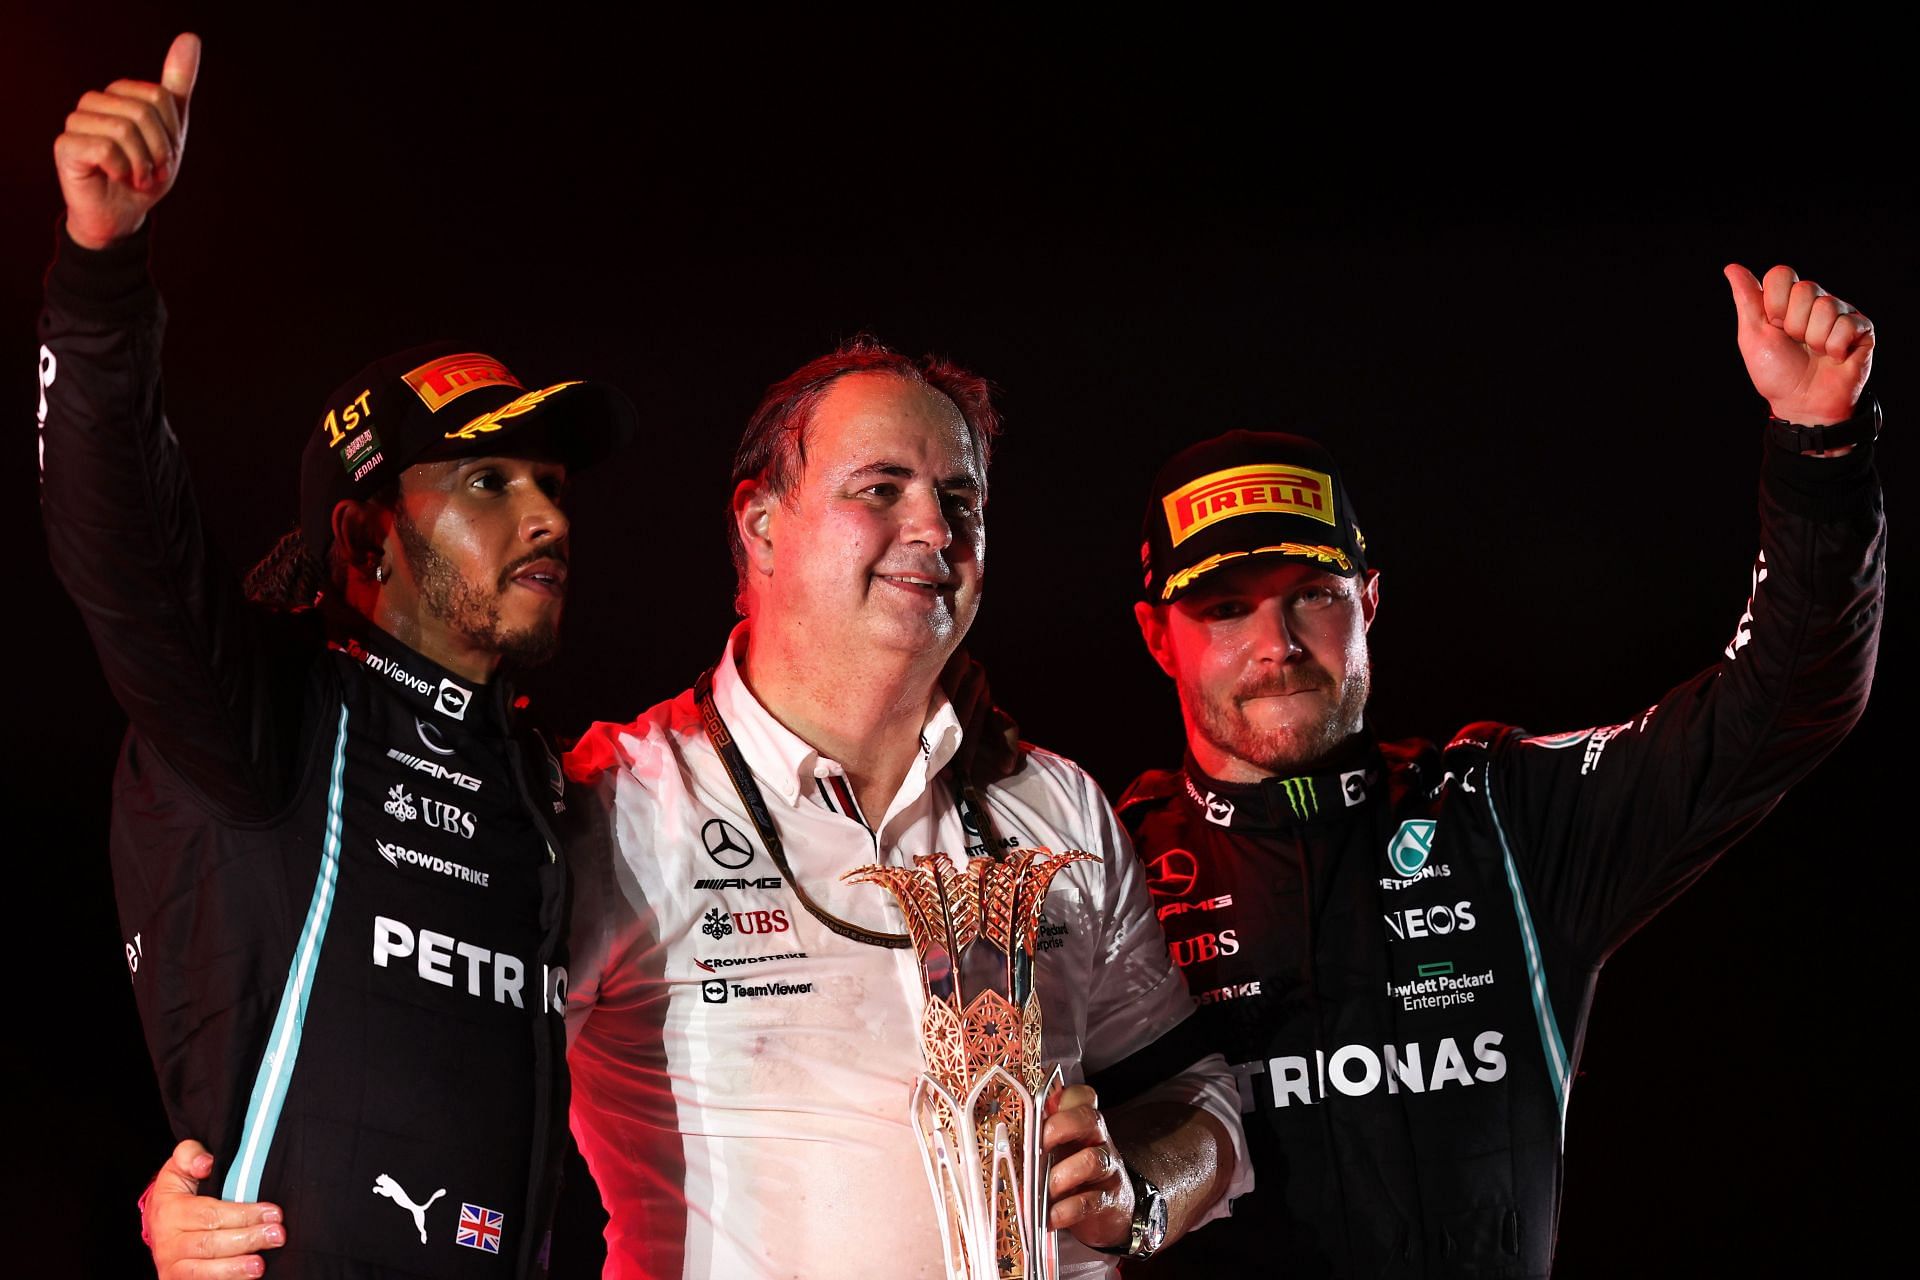 F1 Grand Prix of Saudi Arabia - Lewis Hamilton and Valtteri Bottas share a podium for the final time as Mercedes teammates.